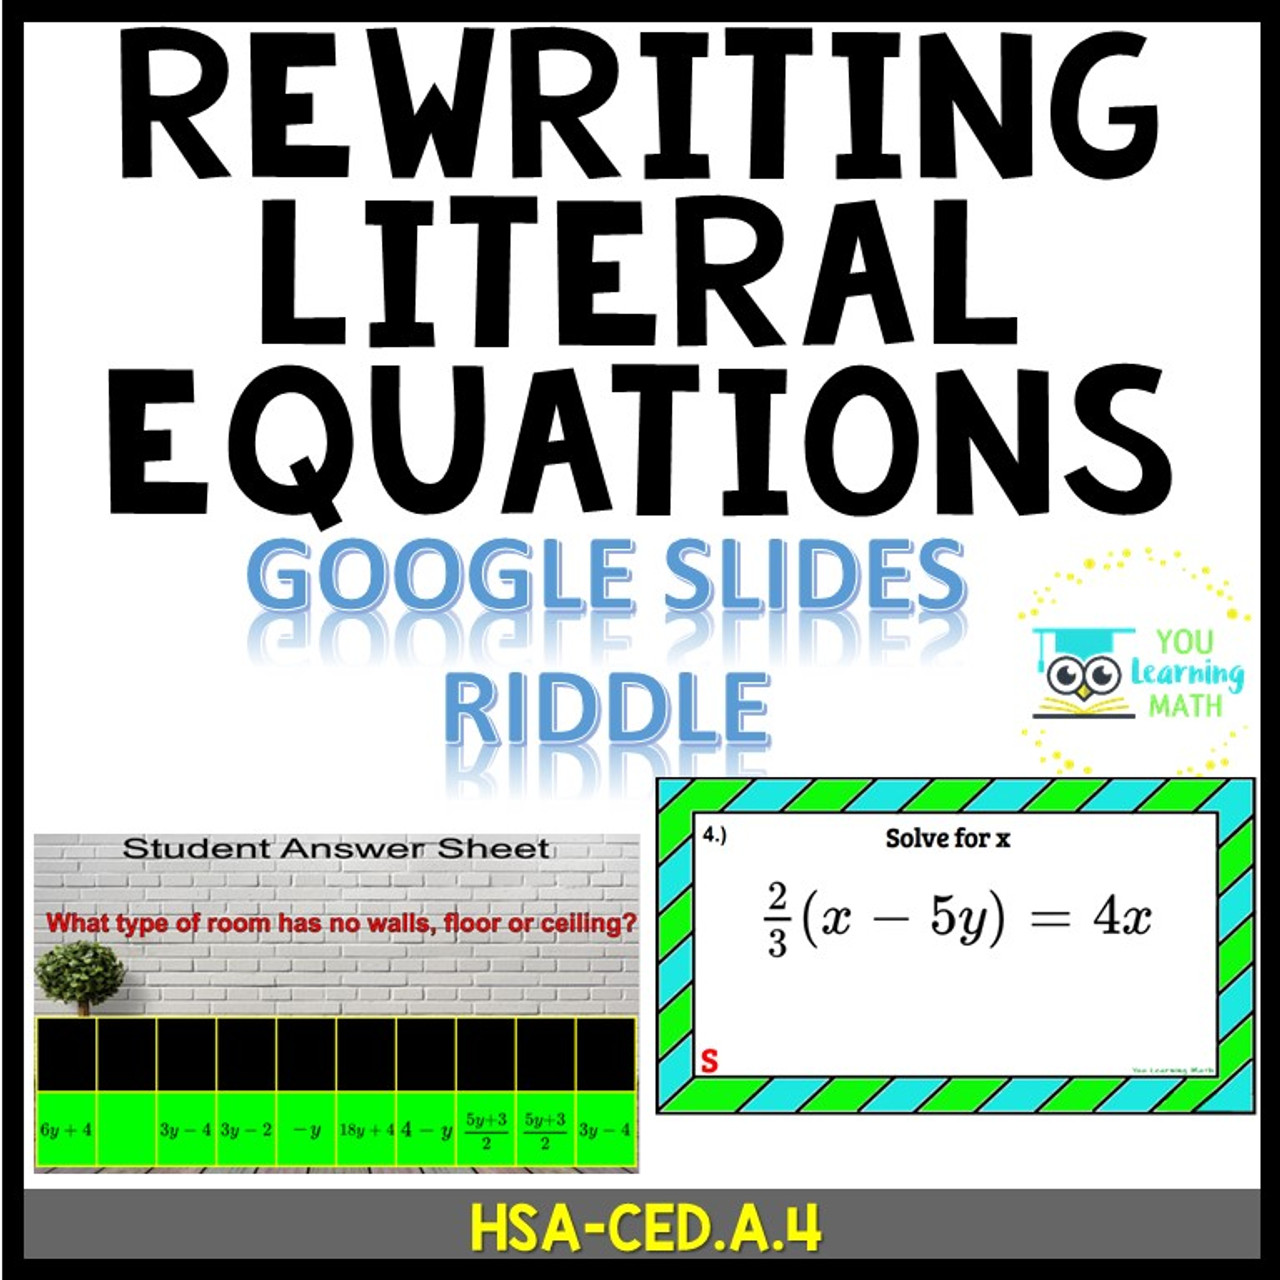 Rewriting Literal Equations: Google Slides Riddle (7 Problems)